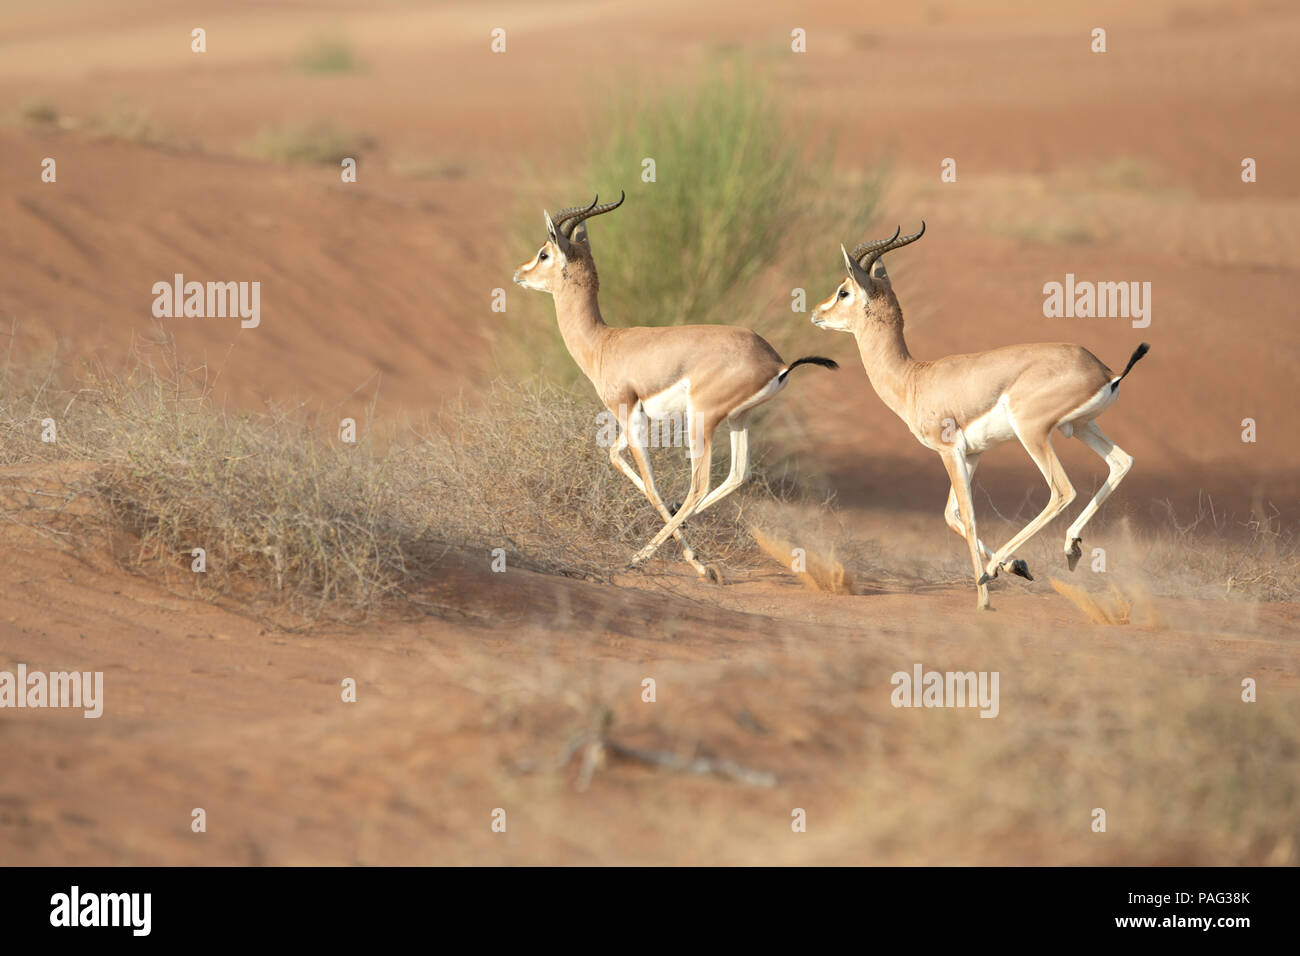 Couple of mountain gazelles running in the desert dunes. Dubai, UAE. Stock Photo